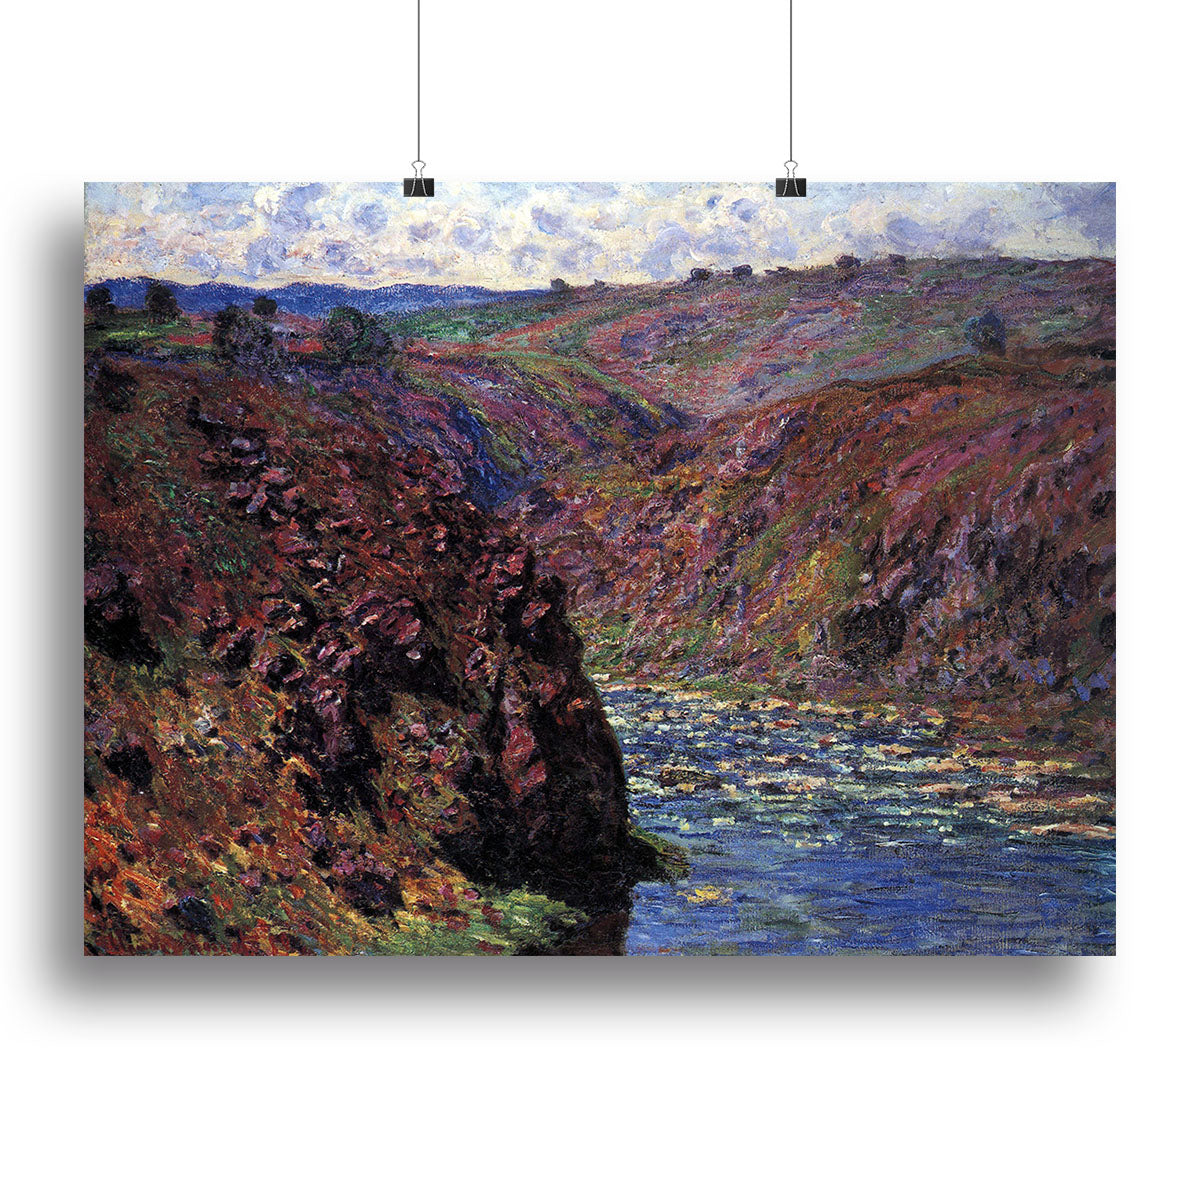 Les Eaux Semblantes in the sunlight by Monet Canvas Print or Poster - Canvas Art Rocks - 2